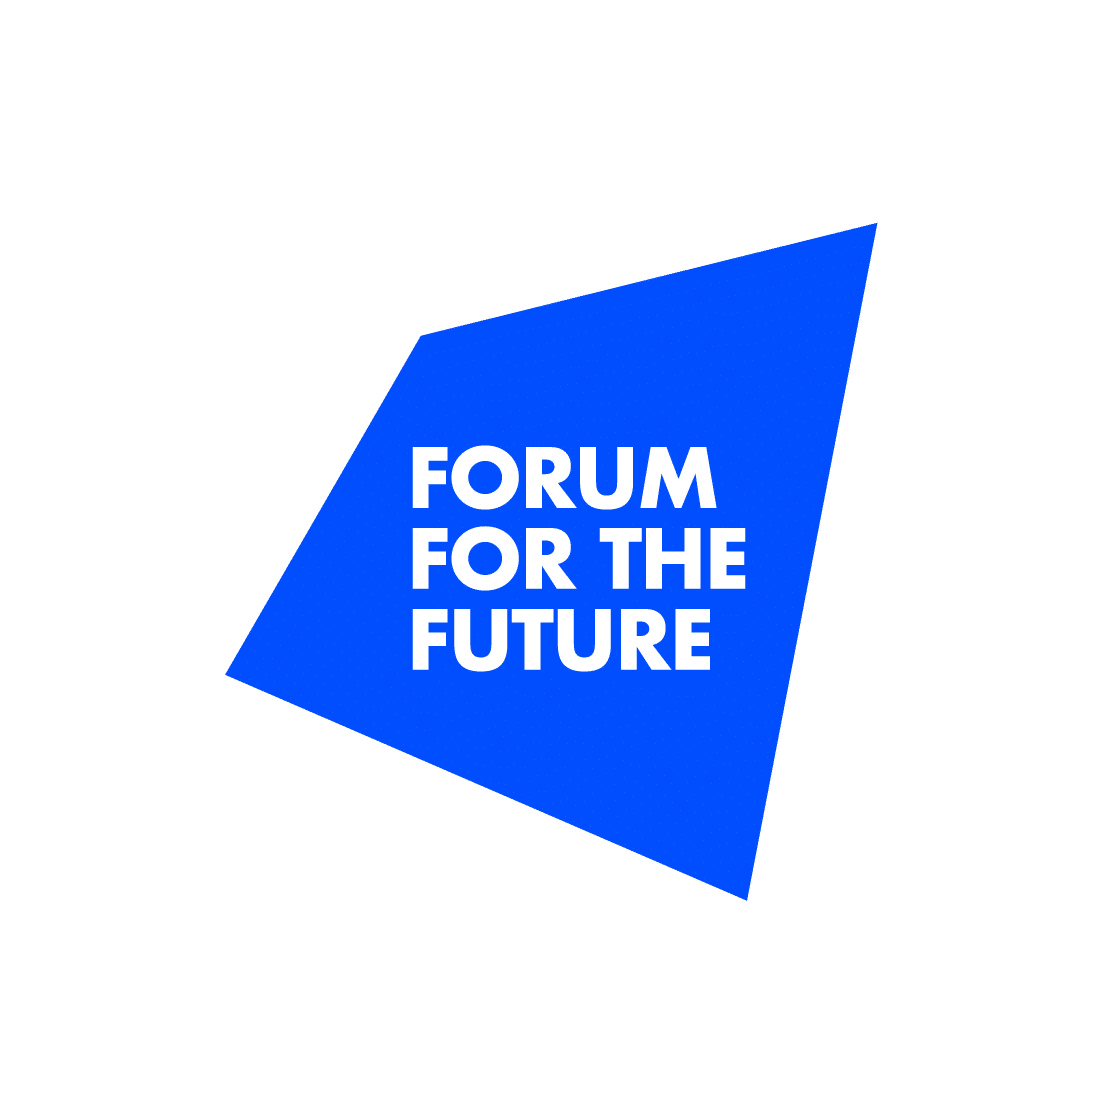 Forum for the future logo